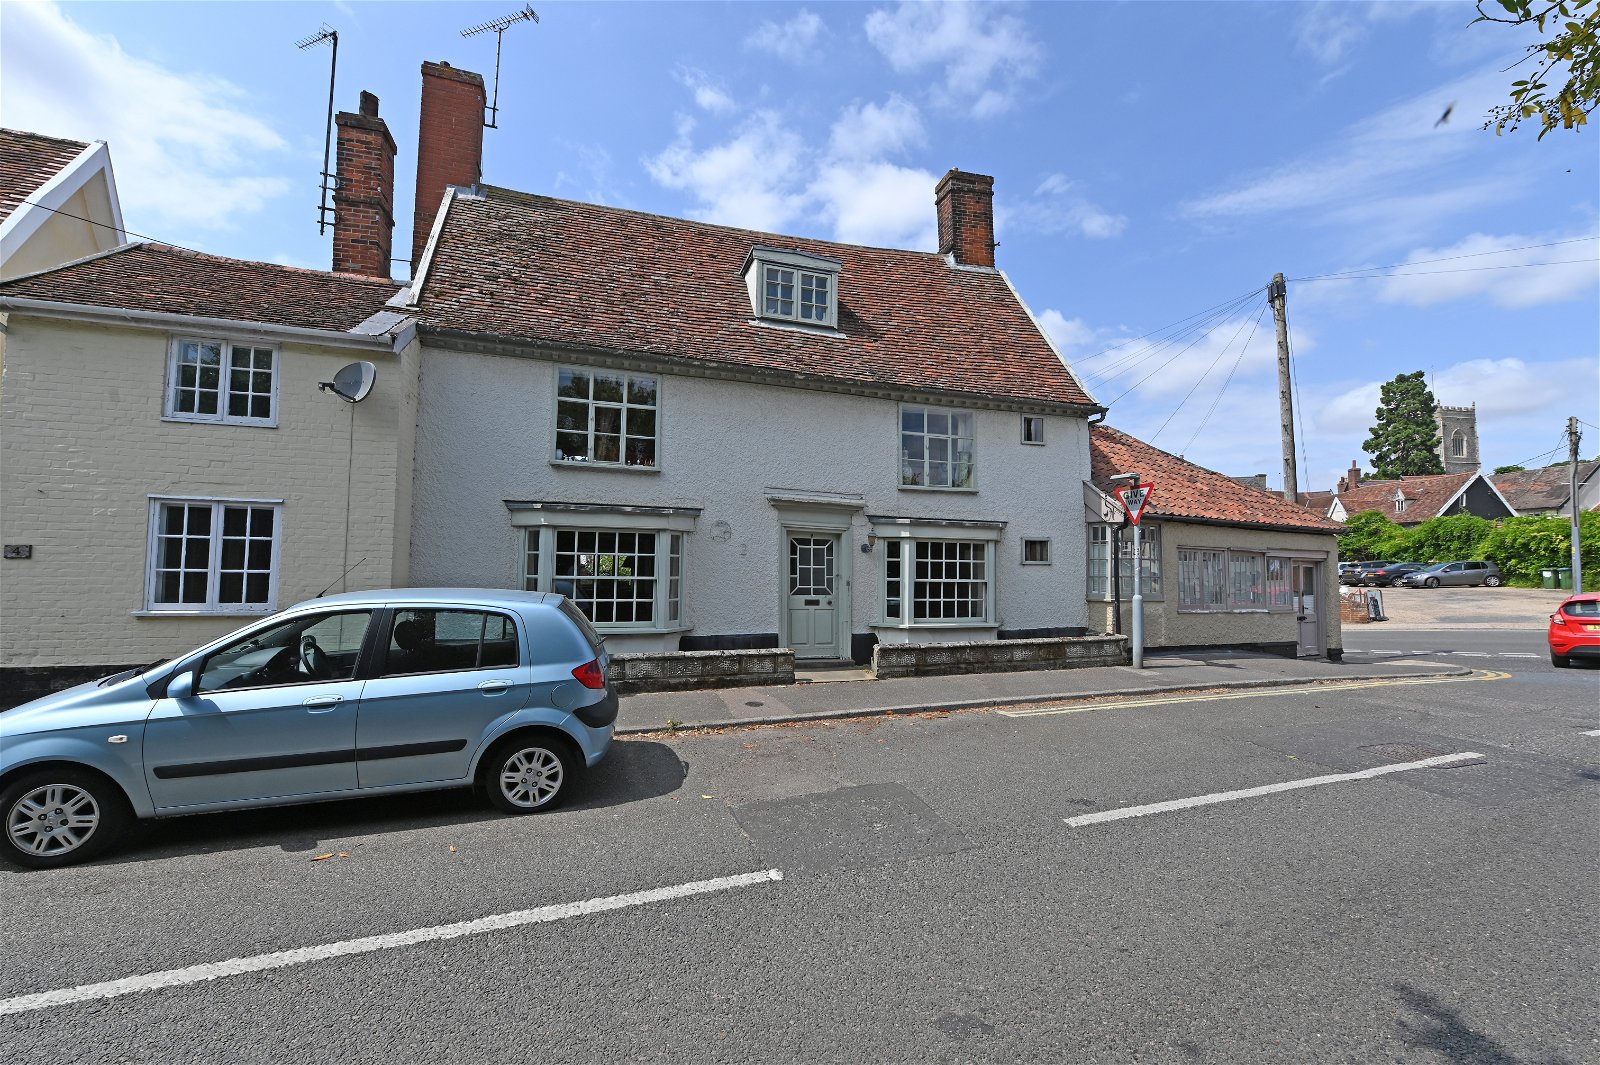 Station Road, Woodbridge, Suffolk property photo